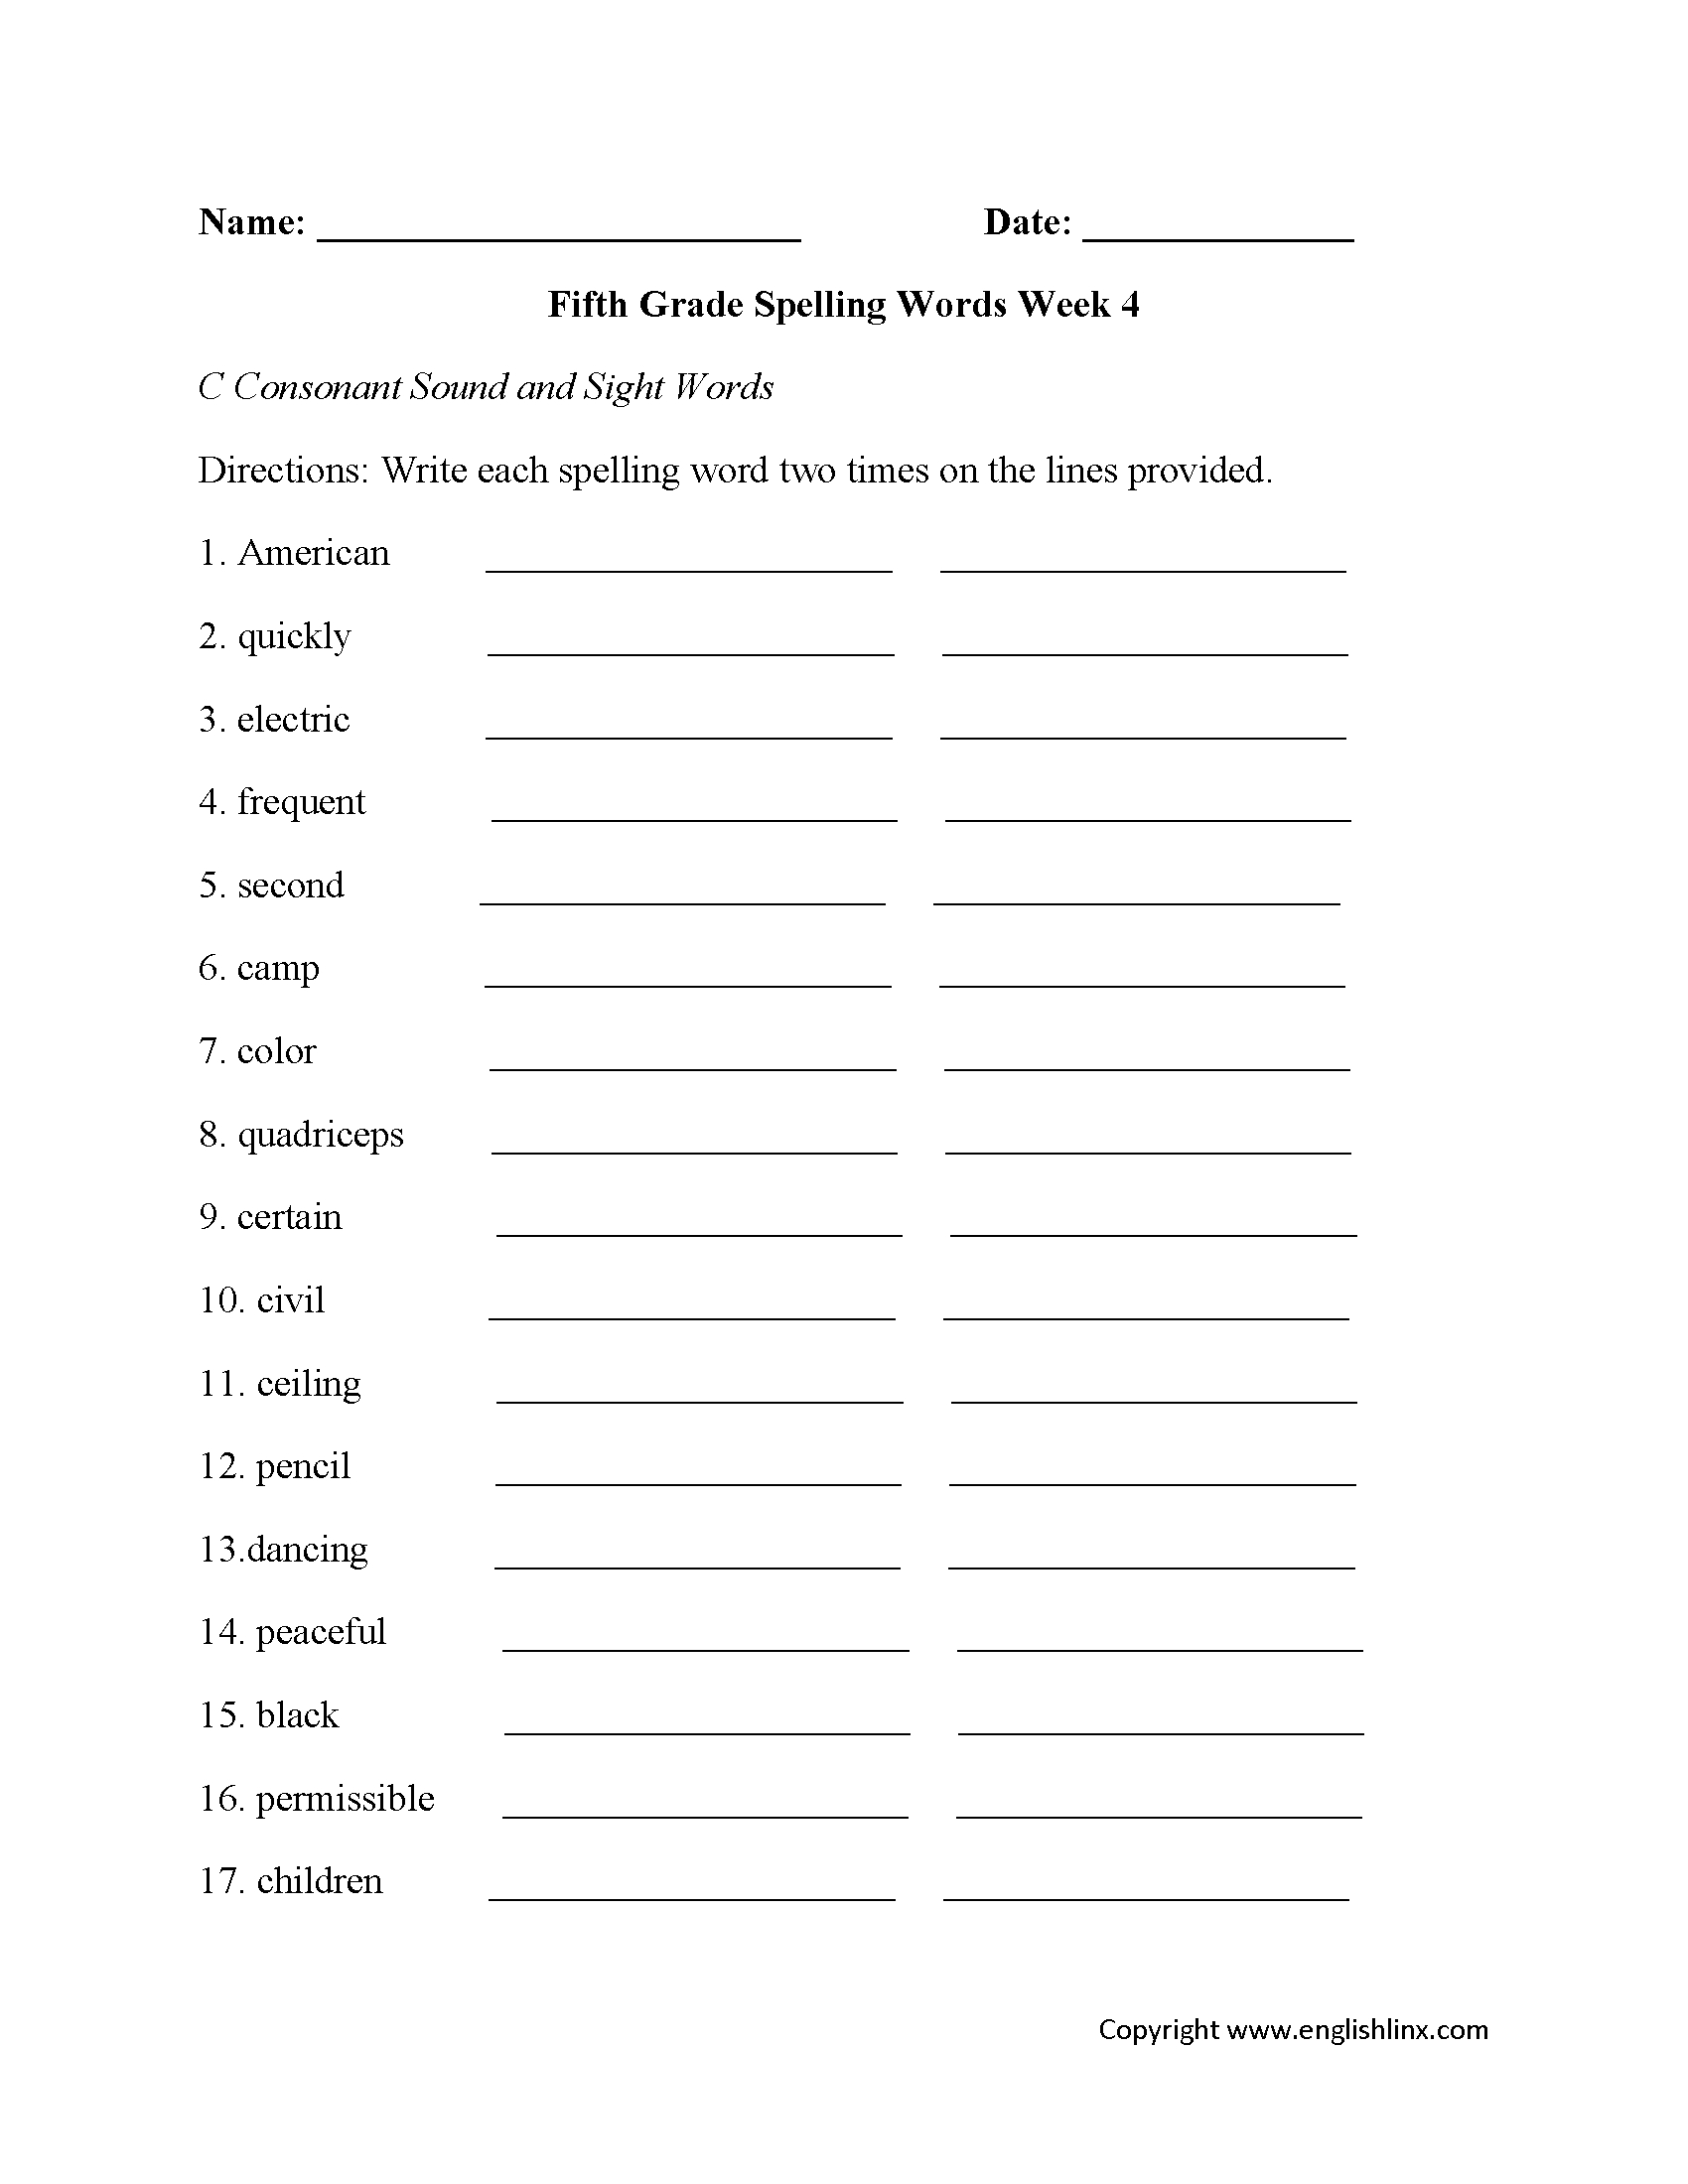 Spelling Worksheets | Fifth Grade Spelling Worksheets - Free Printable Spelling Practice Worksheets